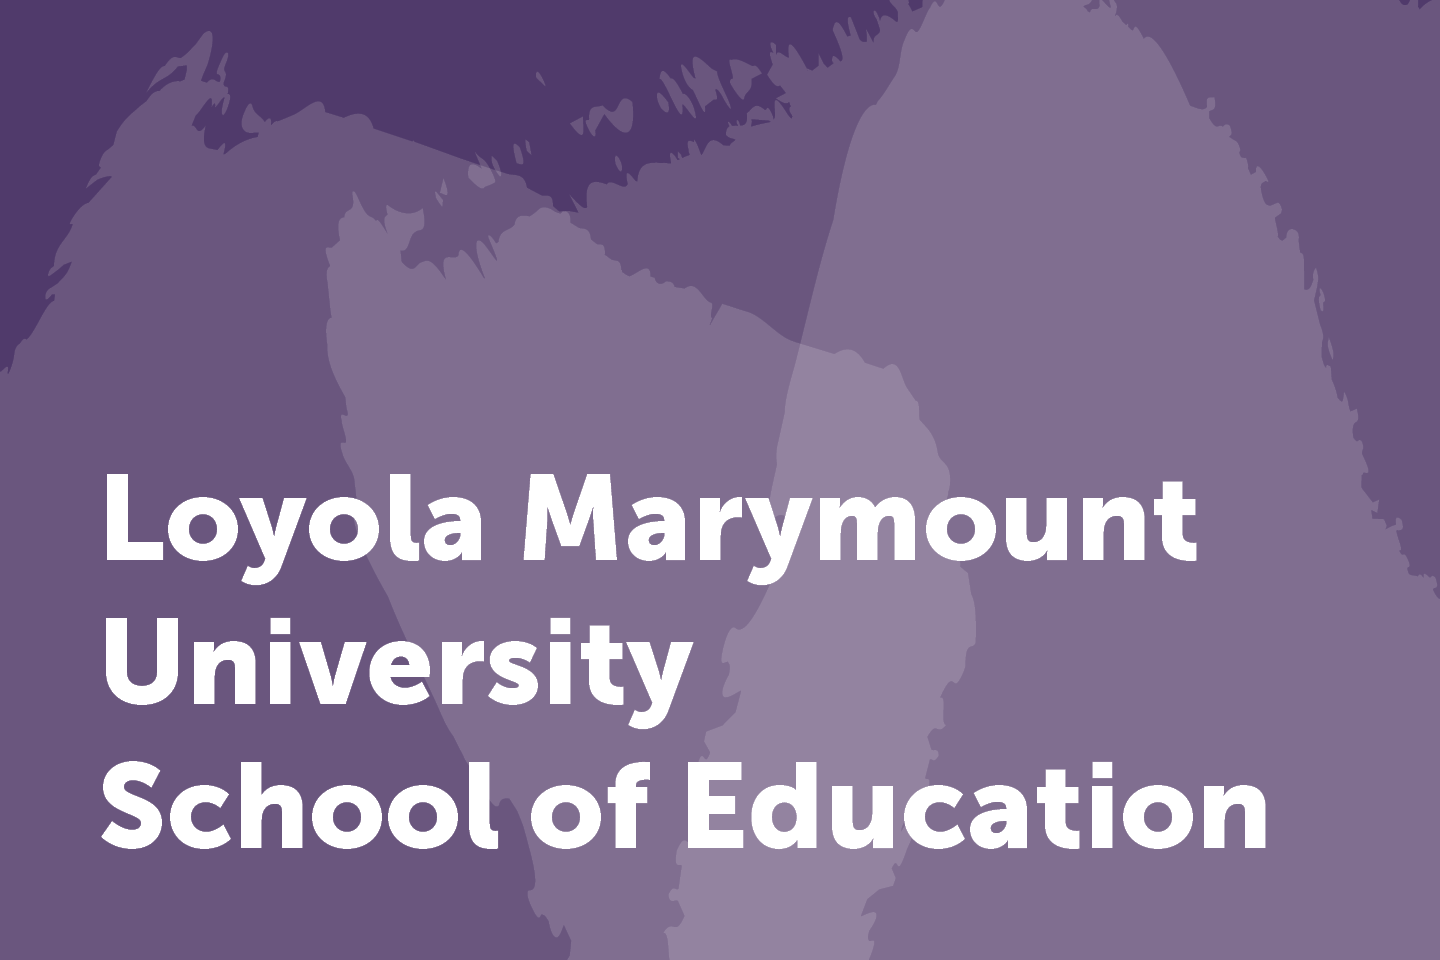 Loyola Marymount University School of Education